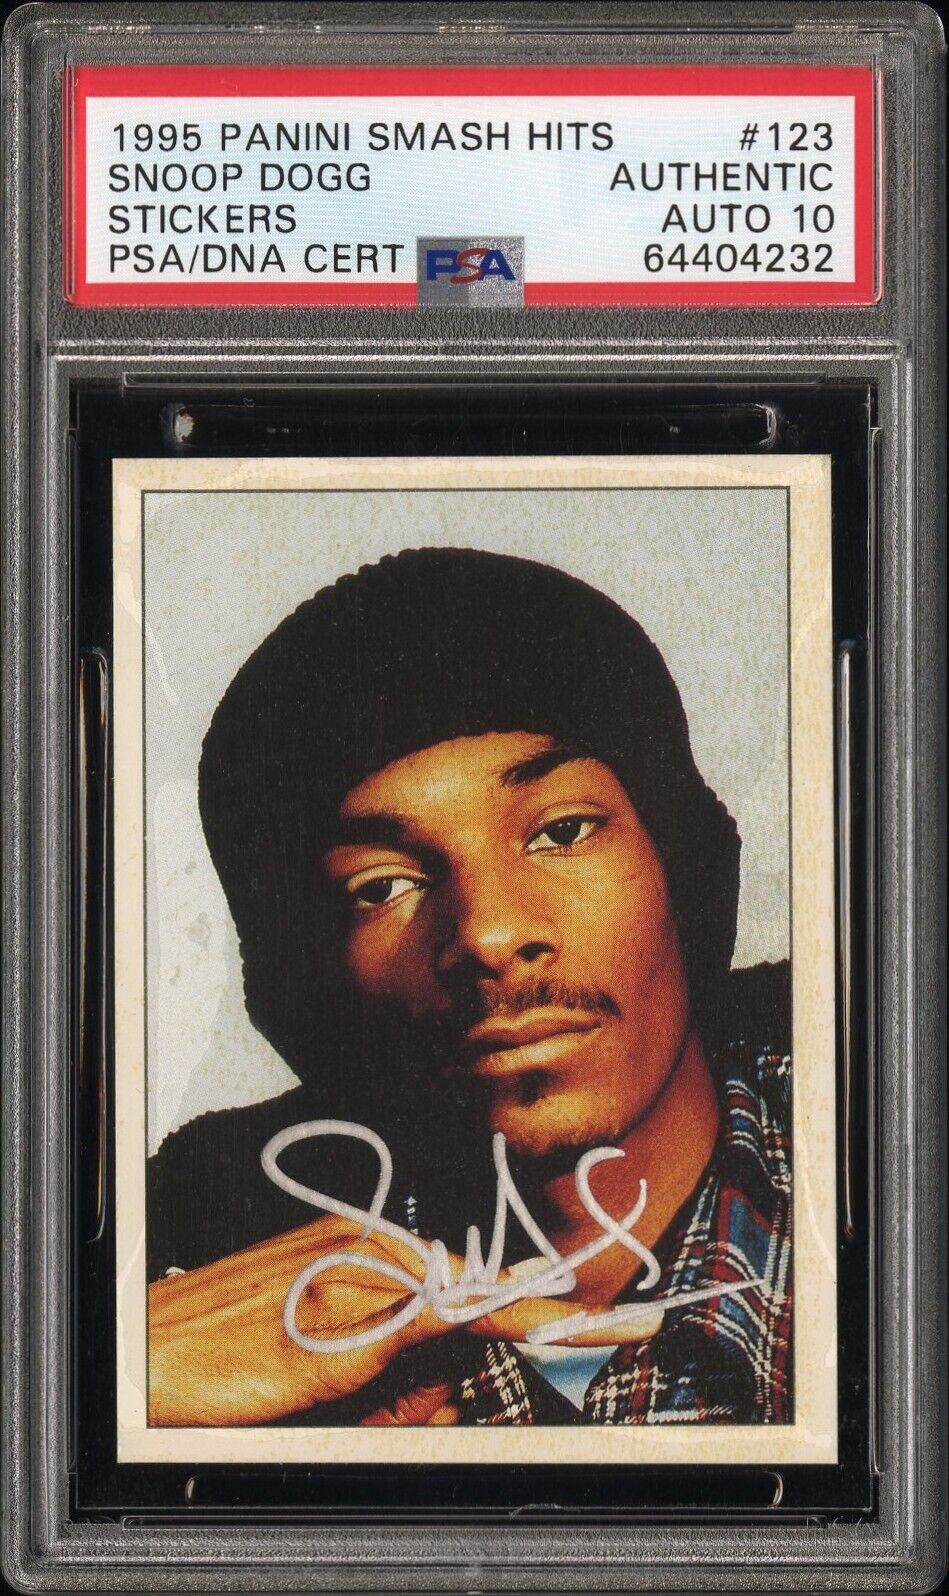 Snoop Dogg Signed 1995 Panini Smash Hits Rookie Card #123 Psa/Dna GEM MT 10 AUTO